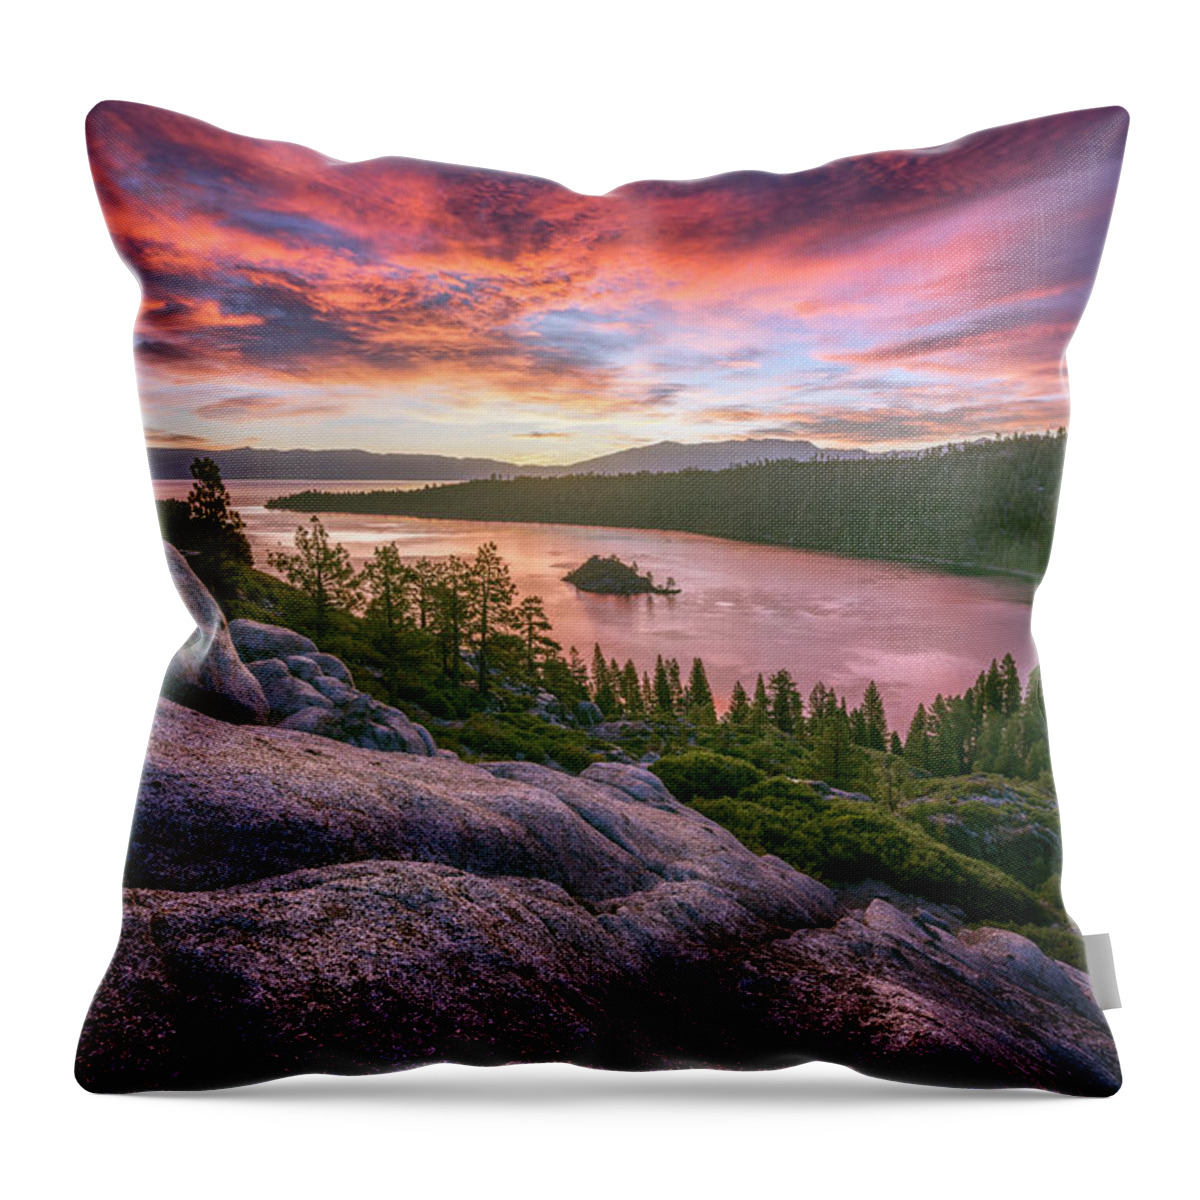 California Throw Pillow featuring the photograph Emerald Bay by BJ Stockton